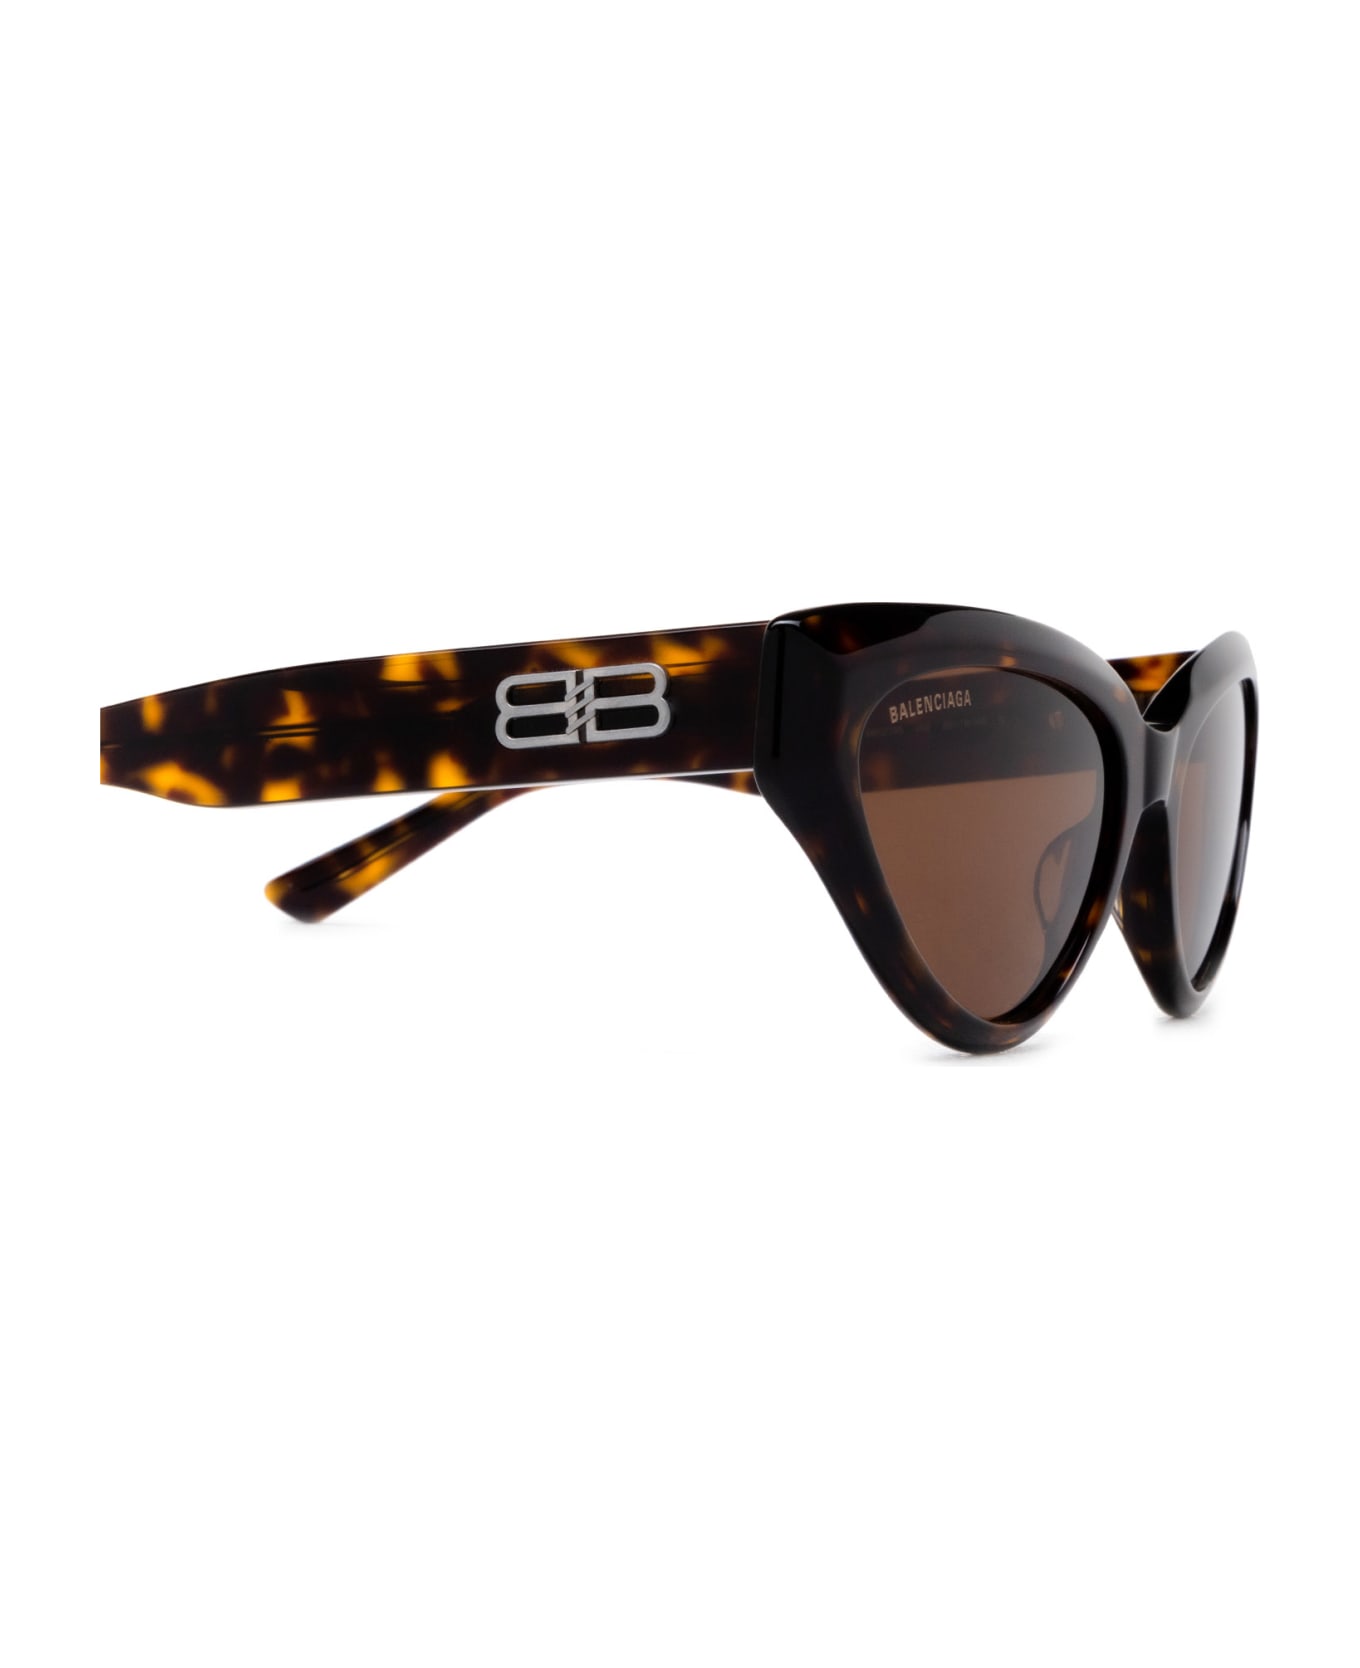 Balenciaga Eyewear Bb0270s Sunglasses - Havana サングラス